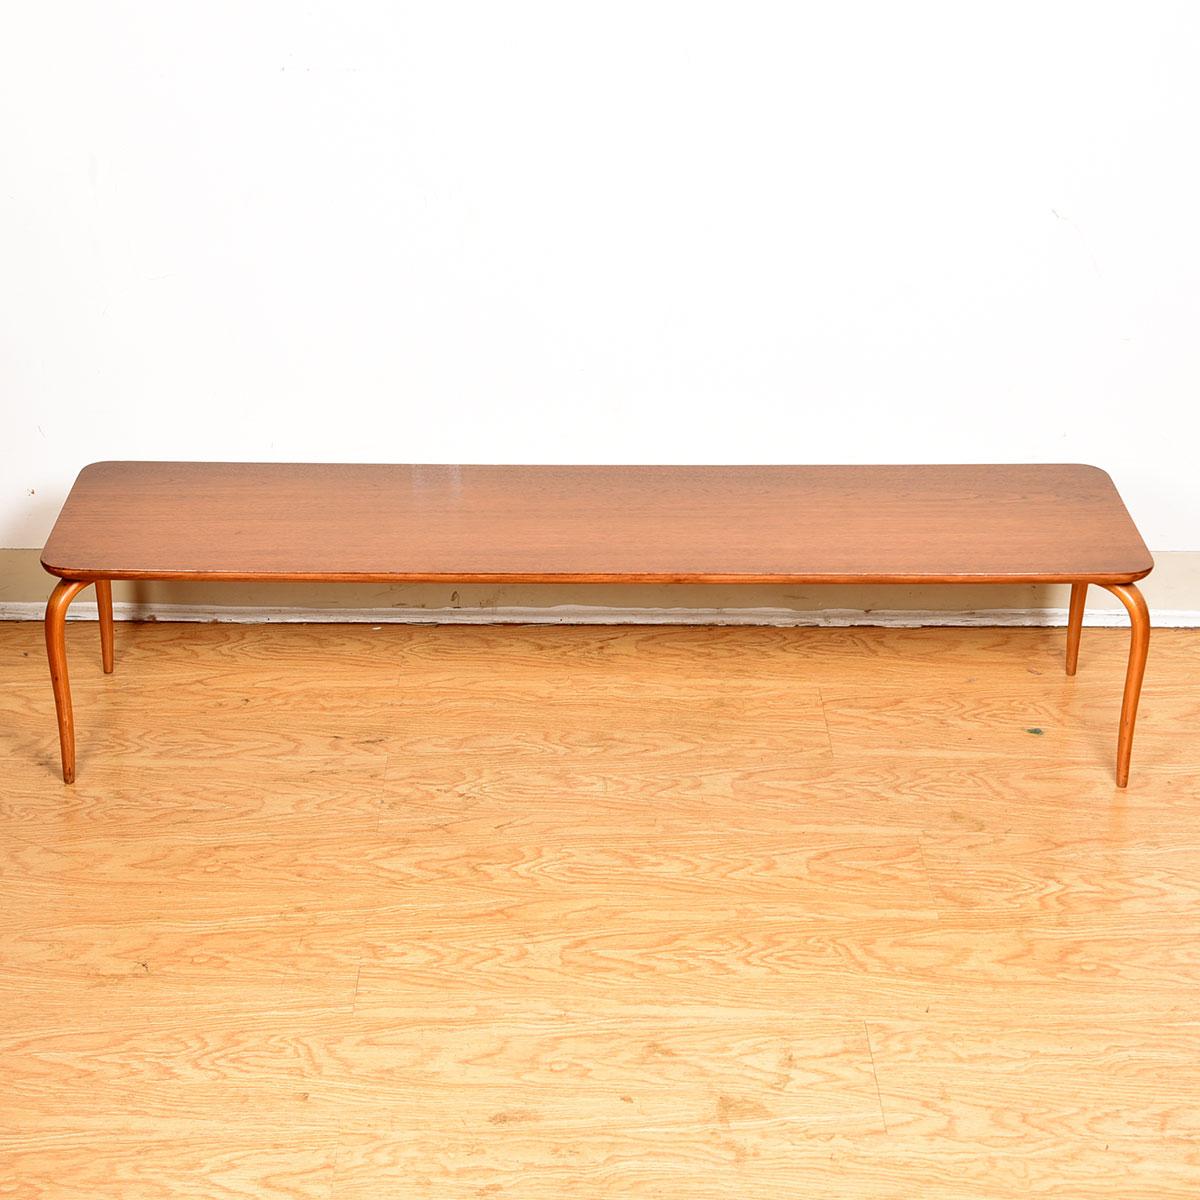 Mid-Century Modern ‘Long Table’ Swedish Modern Organic-Leg Coffee Table by Bruno Mathsson, 1950s For Sale